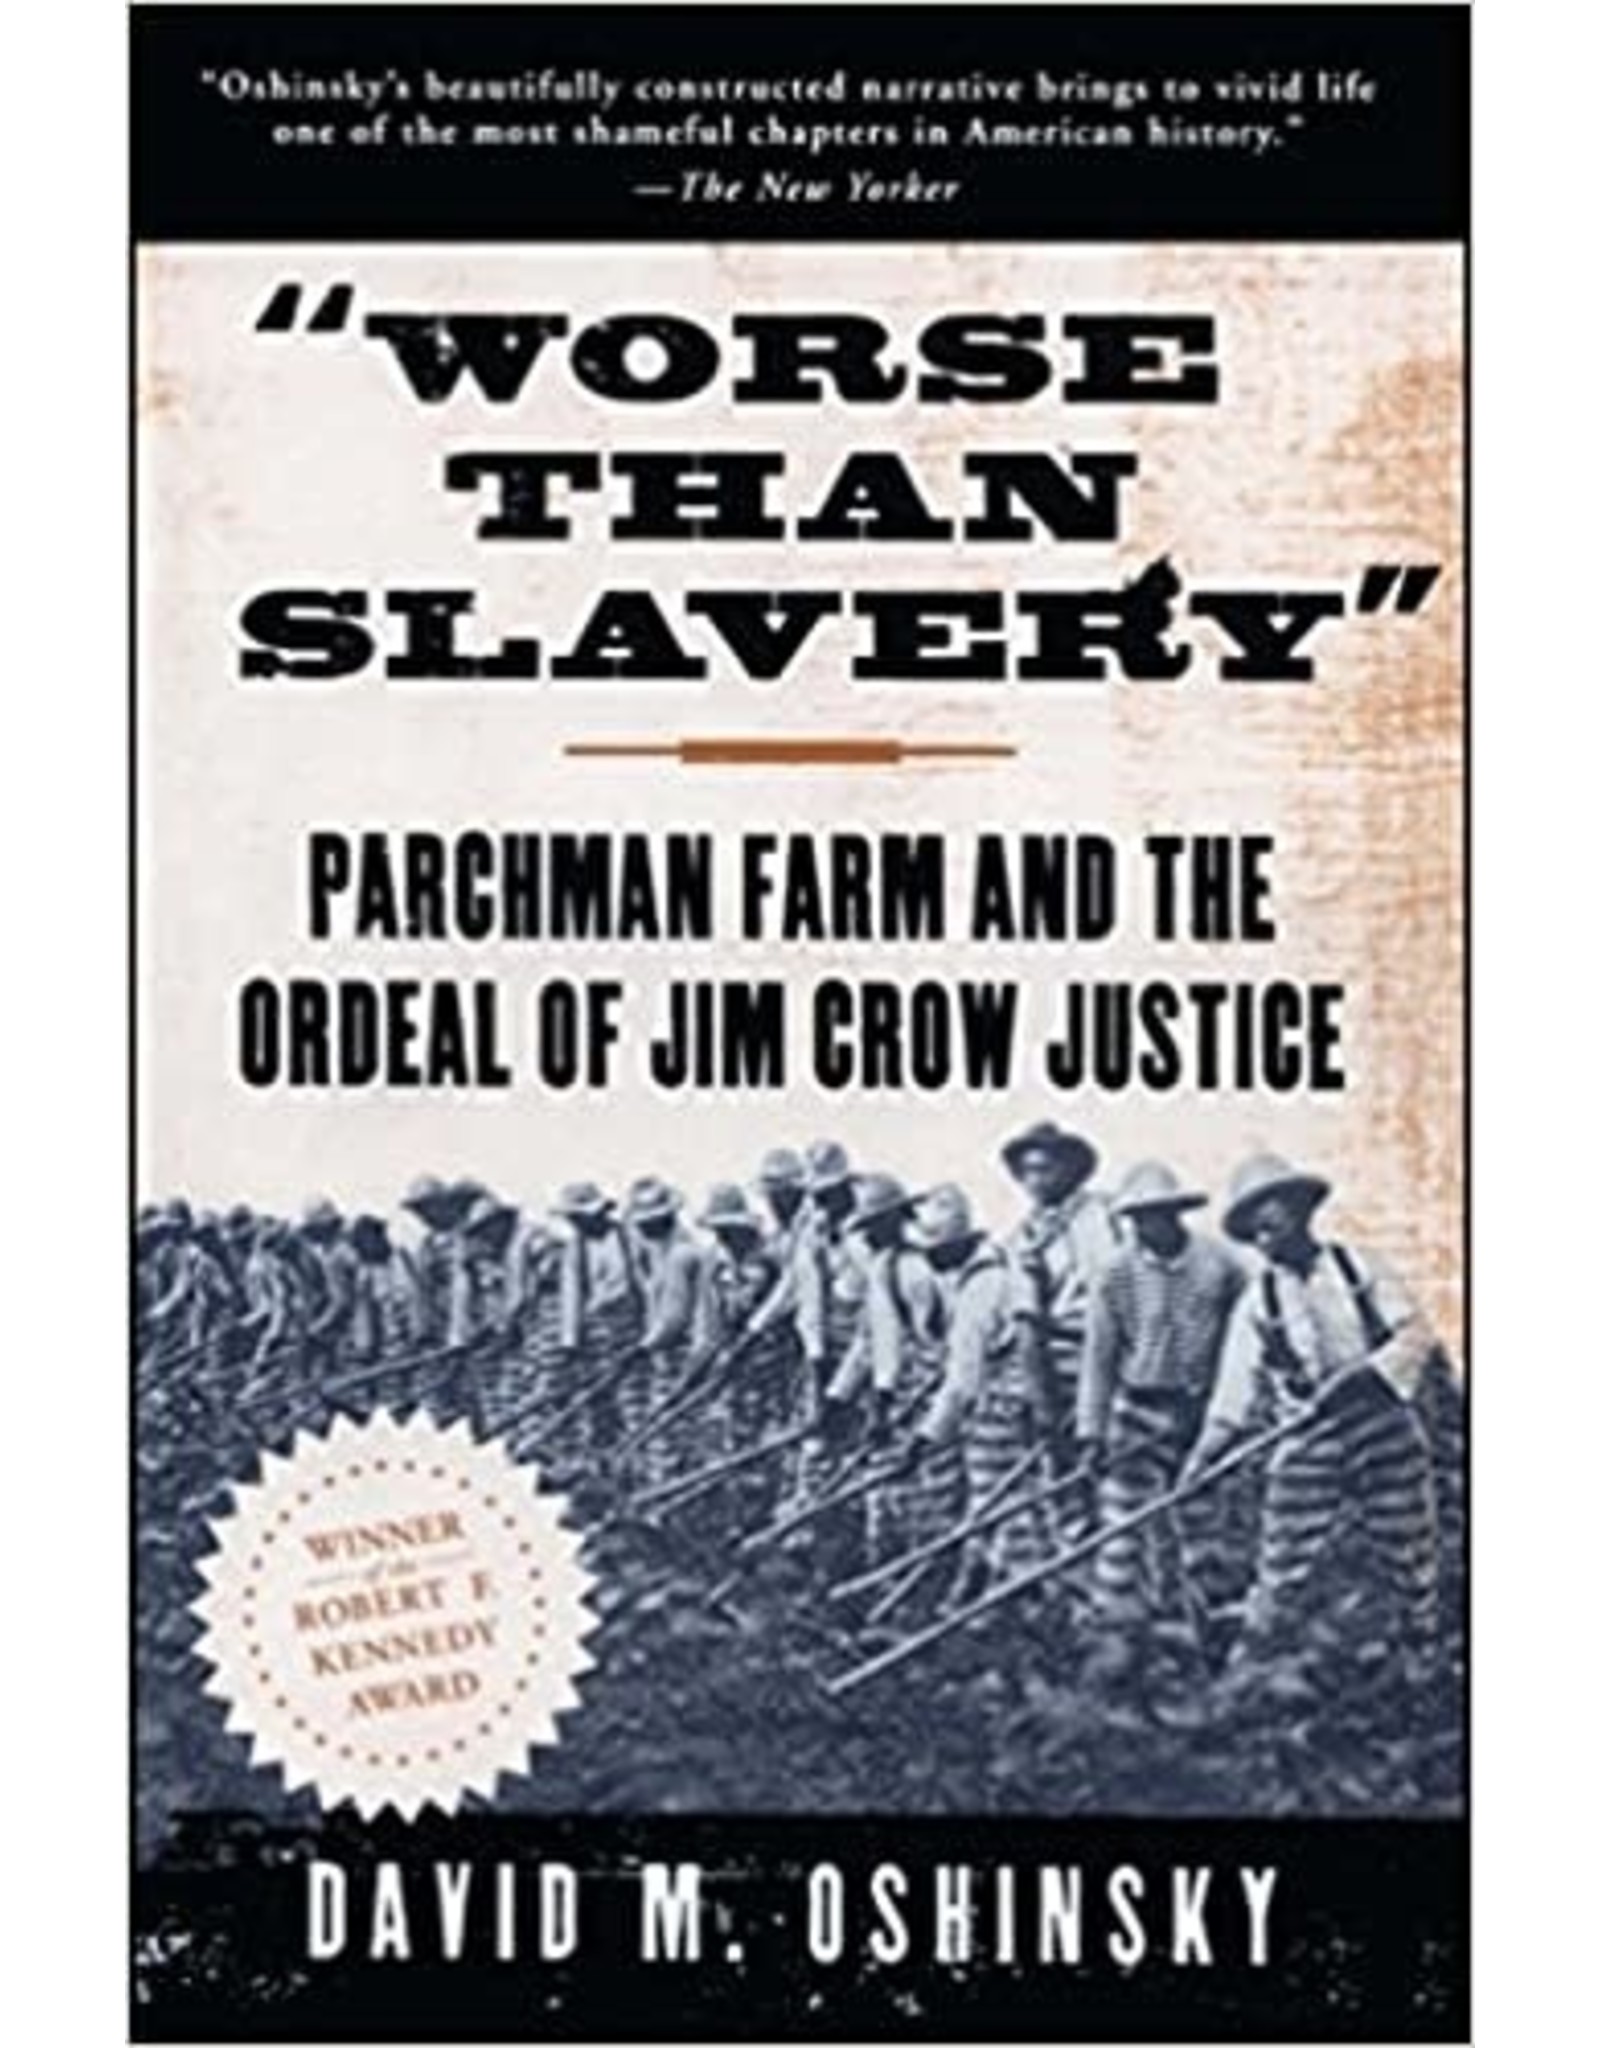 Non-Fiction: Jim Crow Era Worse Than Slavery